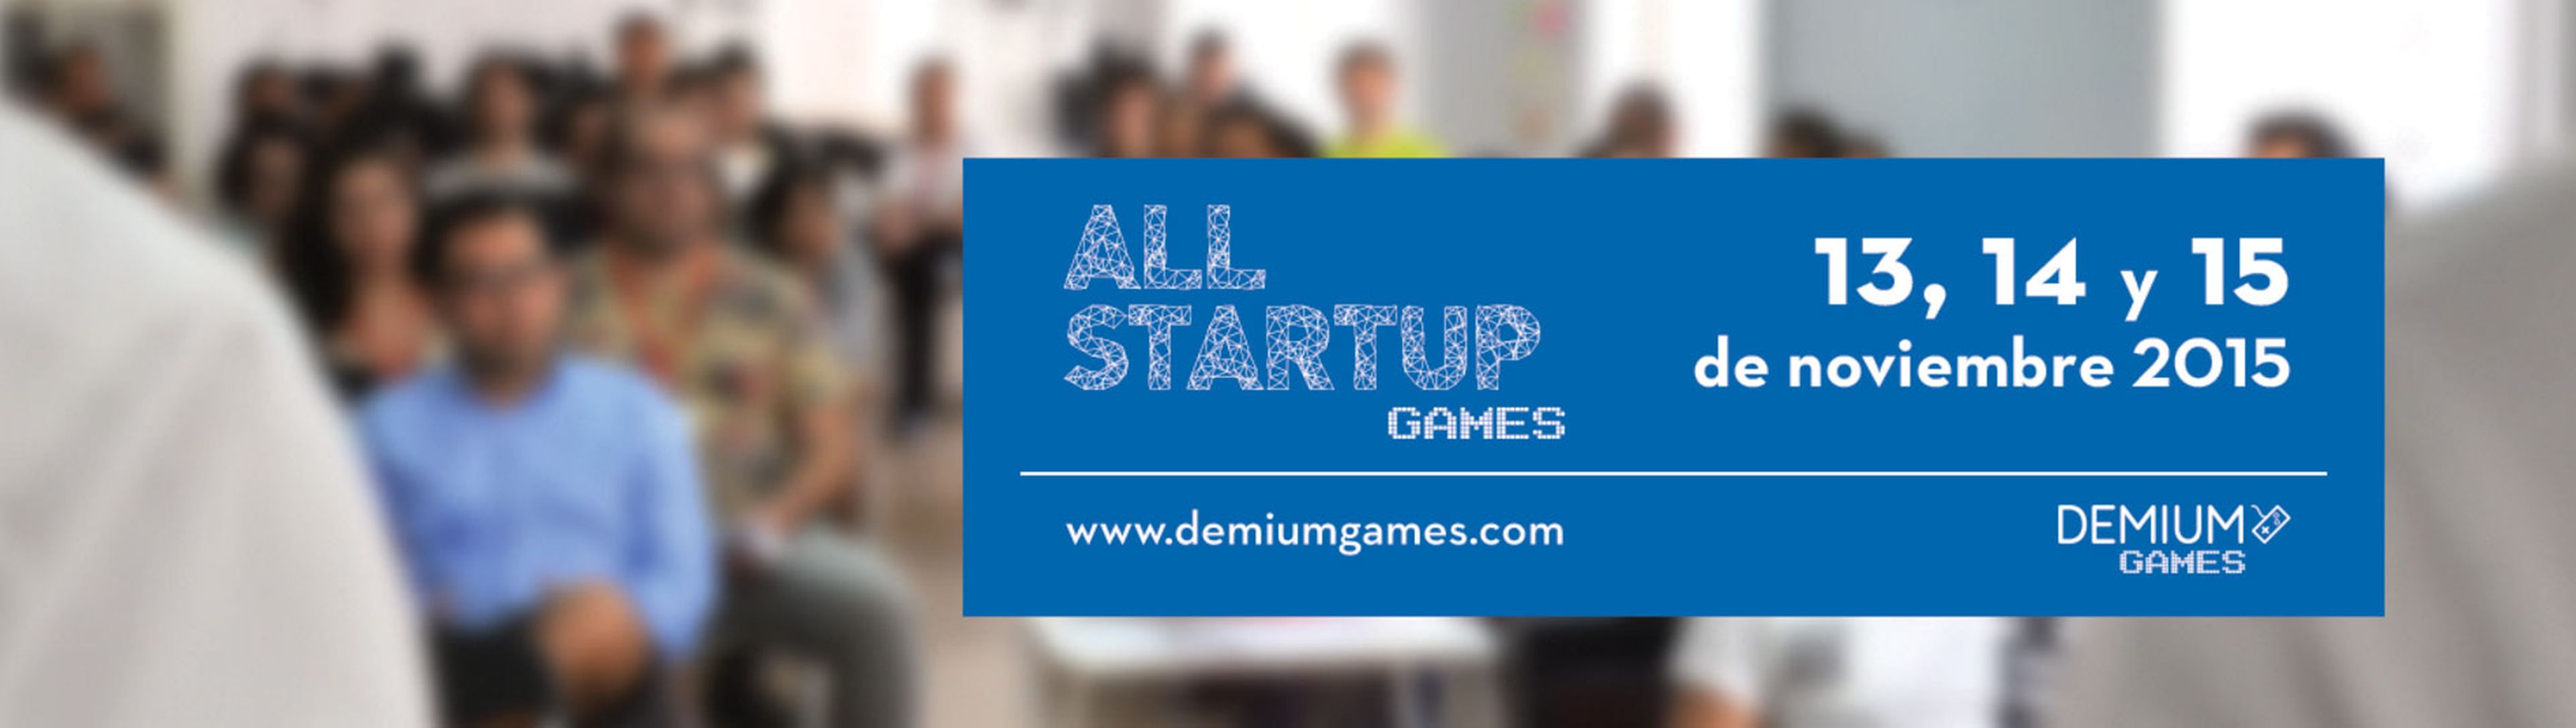 AllStartup Games será el primer evento que organiza Demium Games para captar talentos.